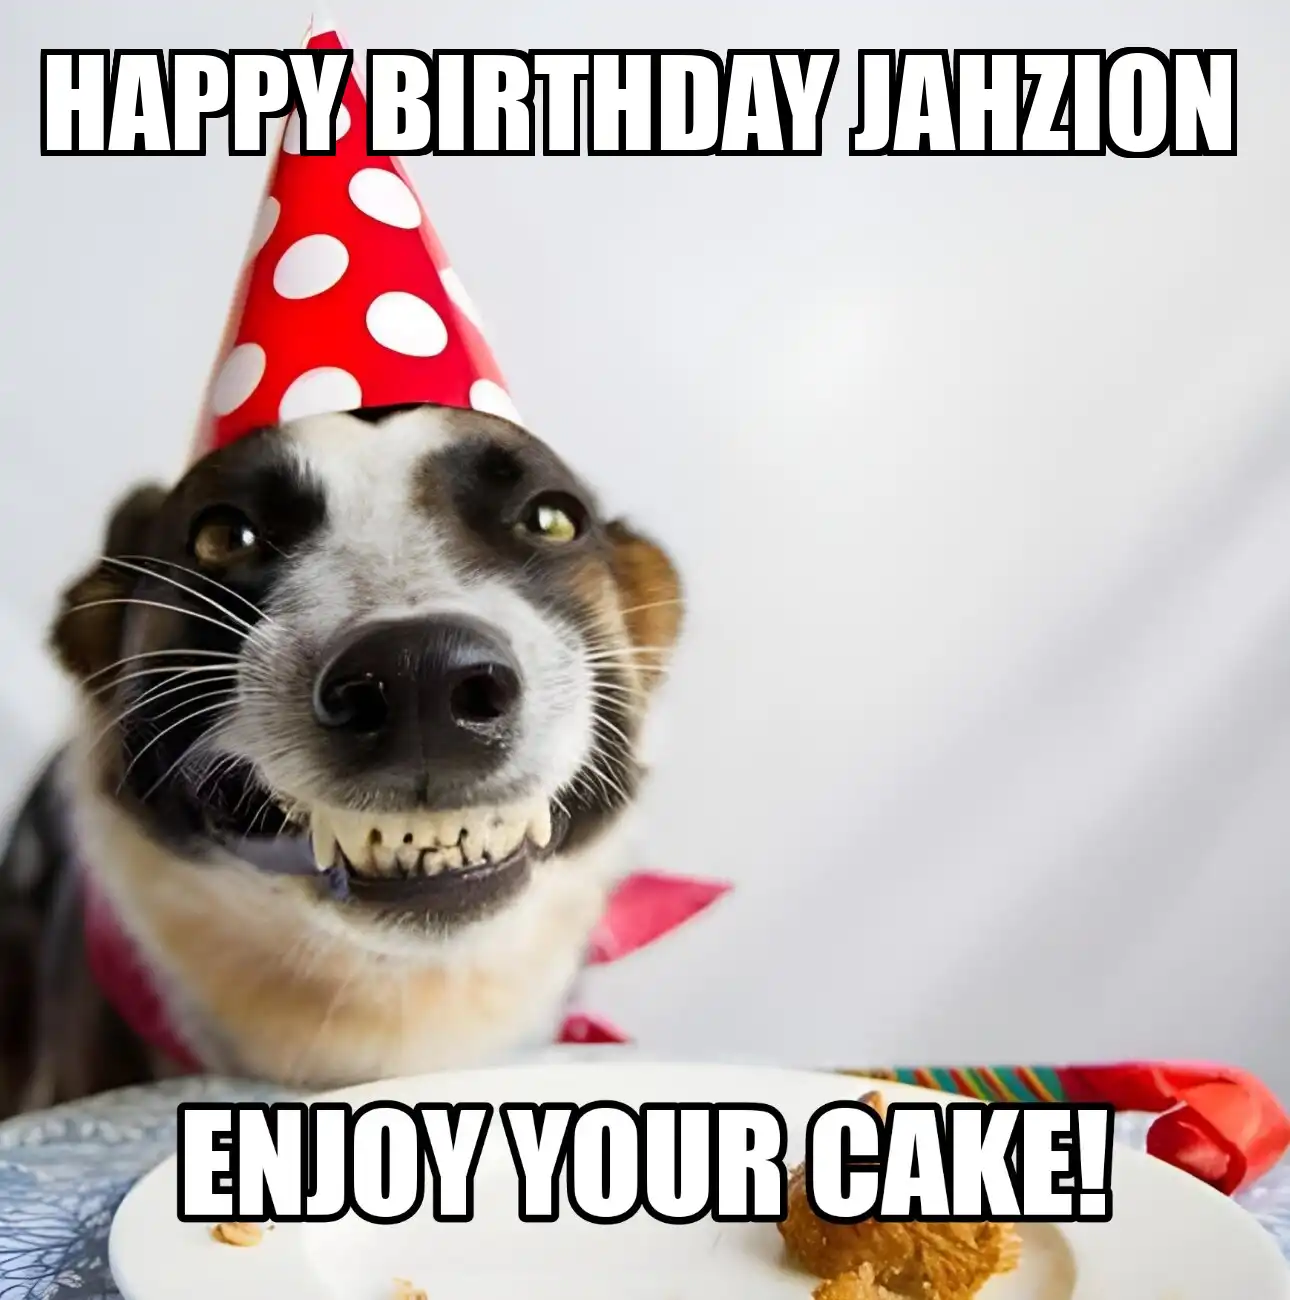 Happy Birthday Jahzion Enjoy Your Cake Dog Meme